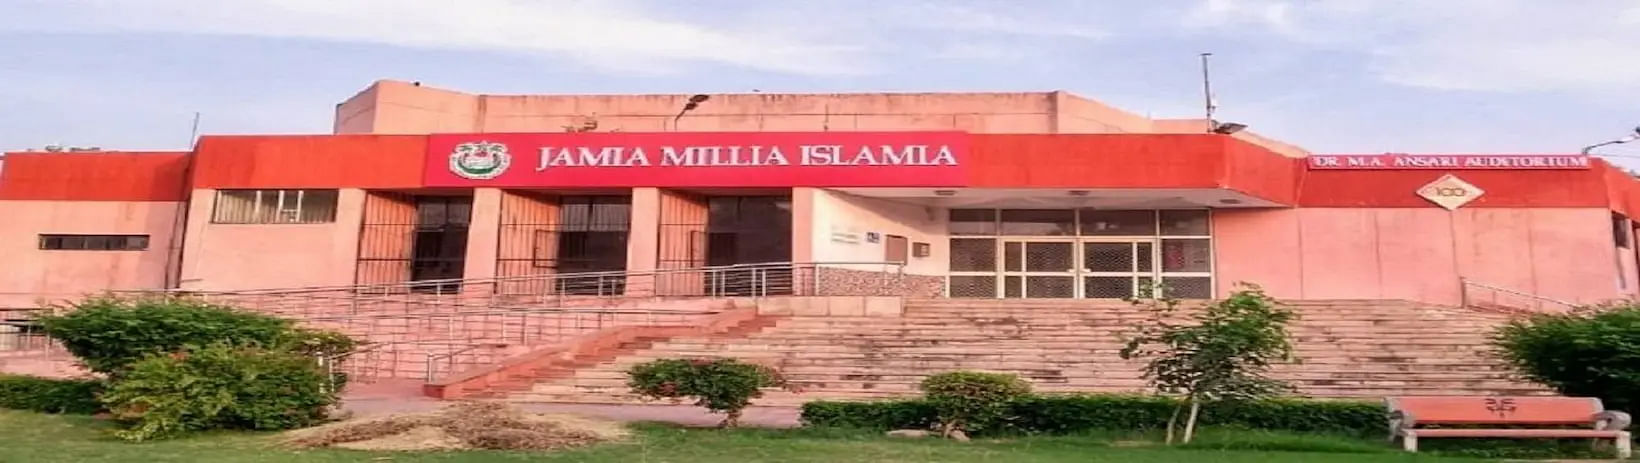 Jamia Millia Islamia University (JMI), New Delhi